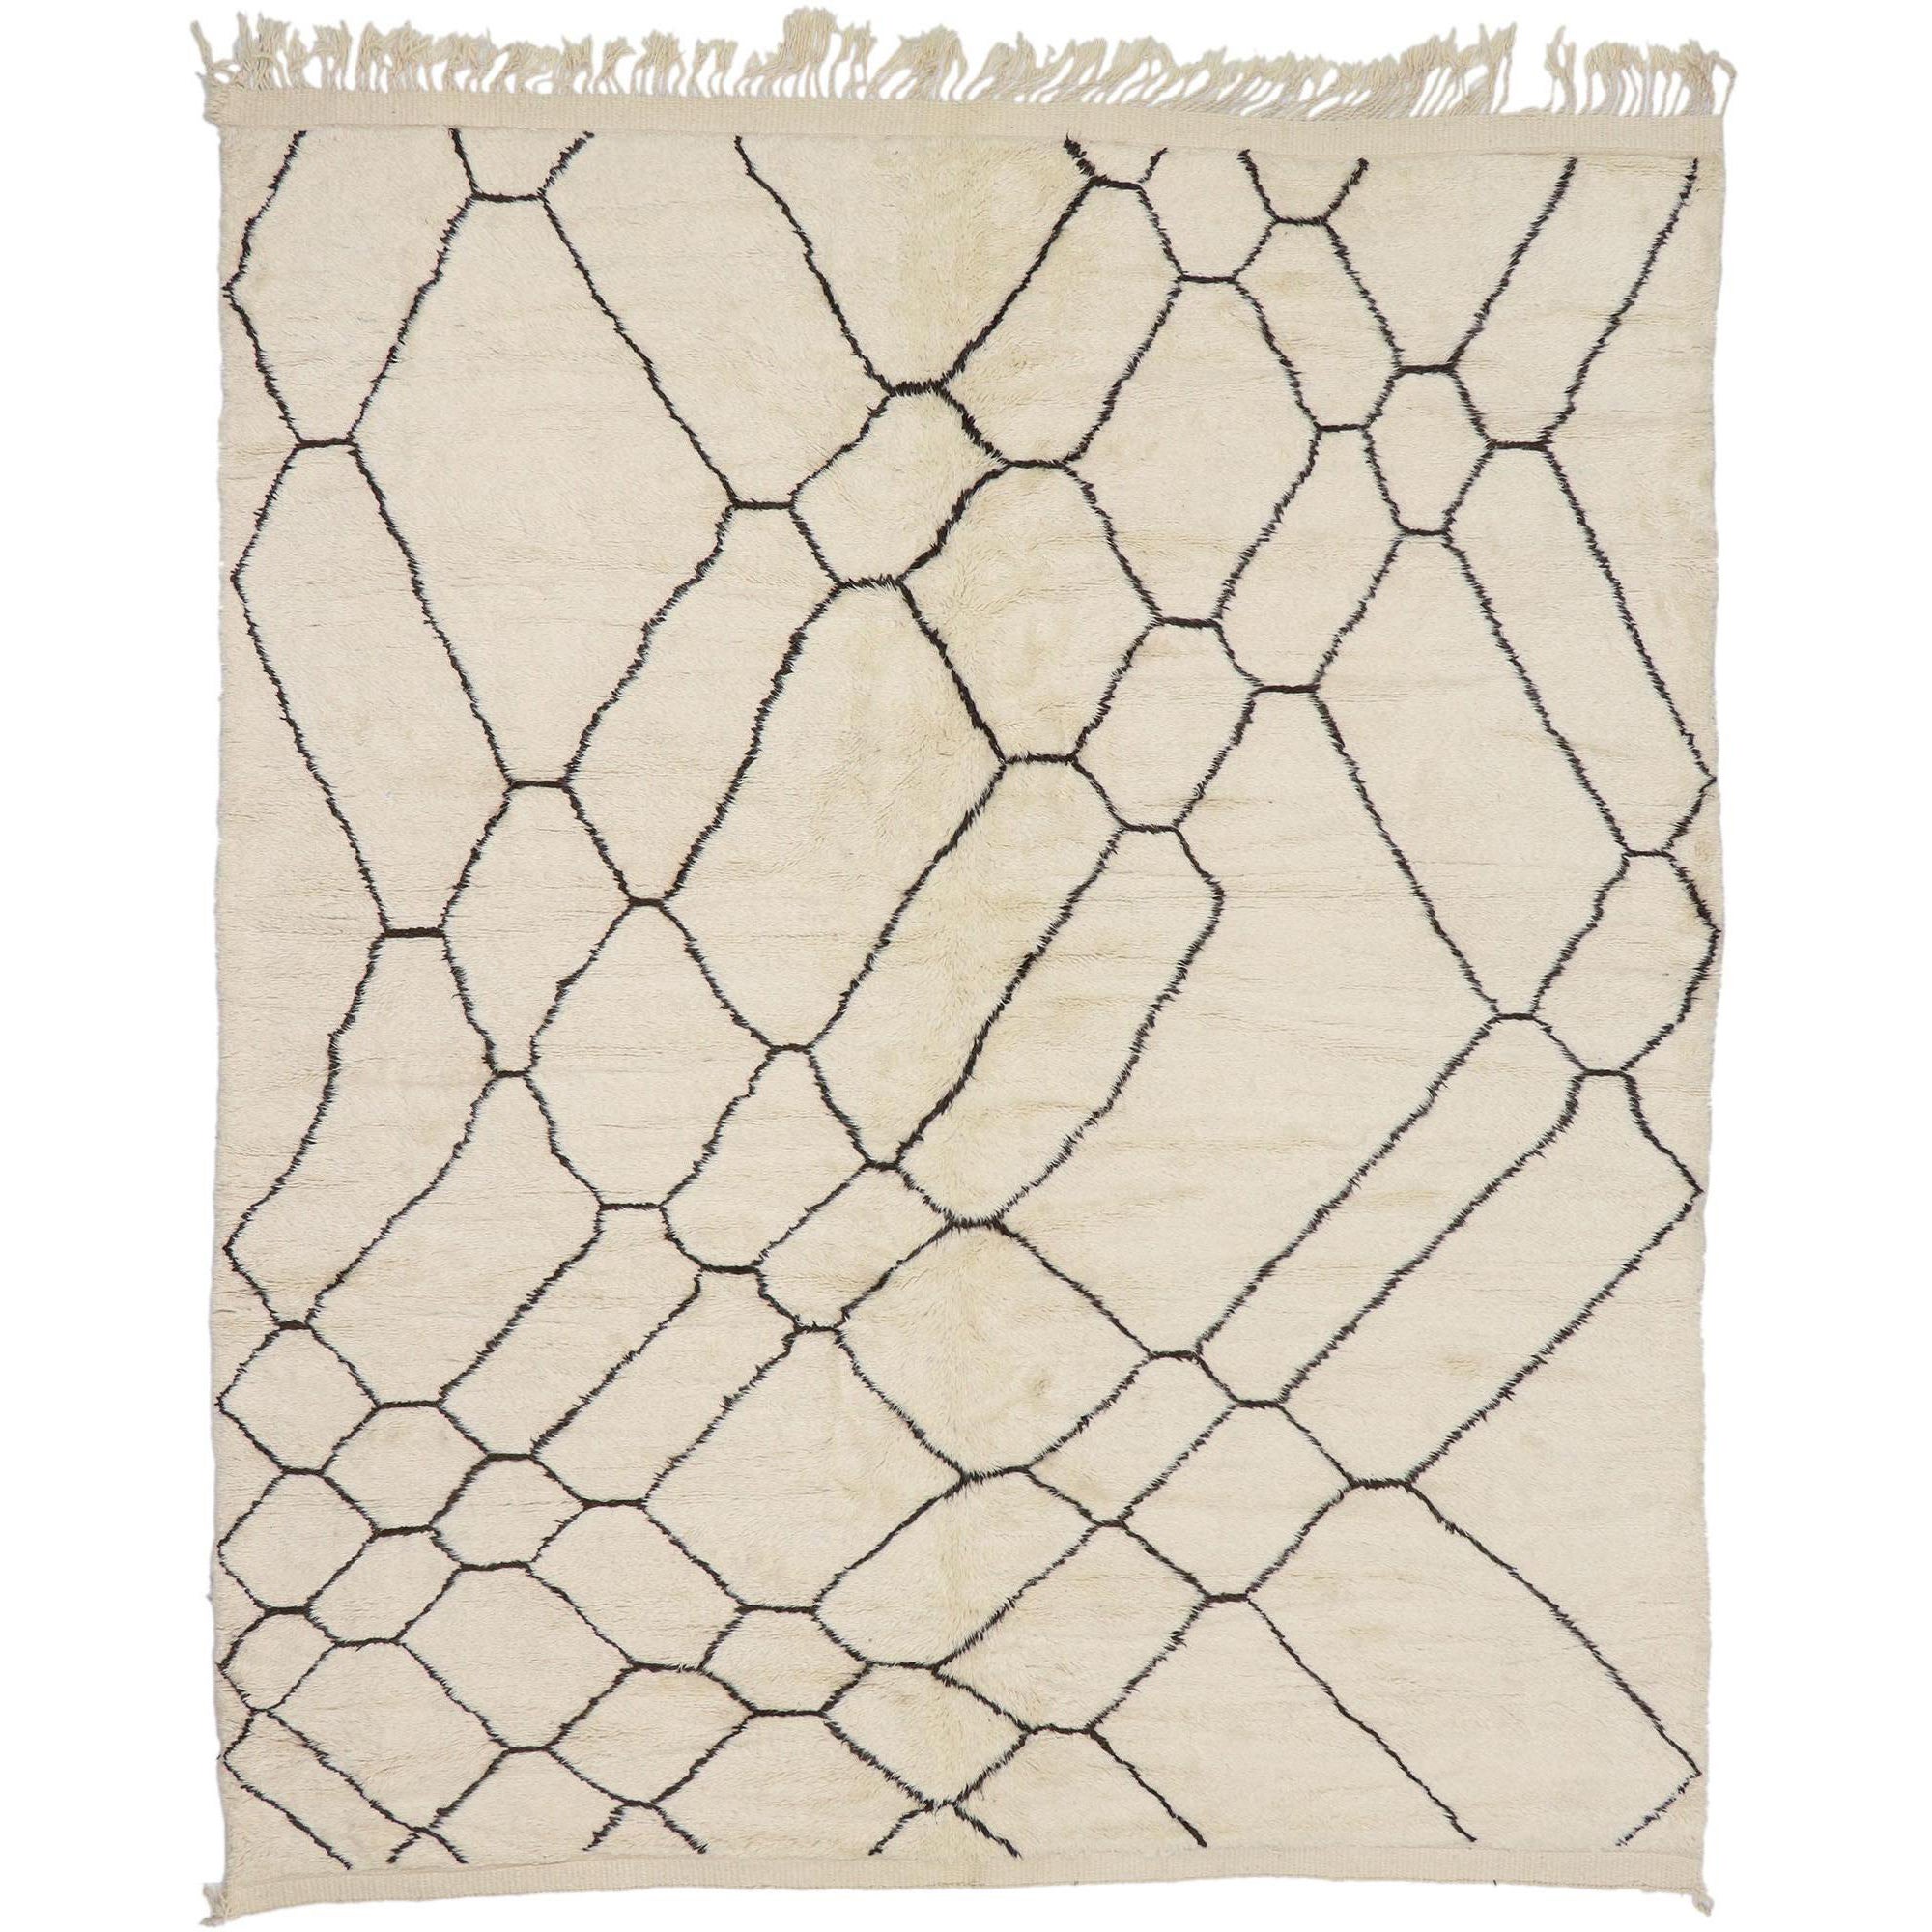 Nouveau tapis berbère marocain contemporain de style minimaliste